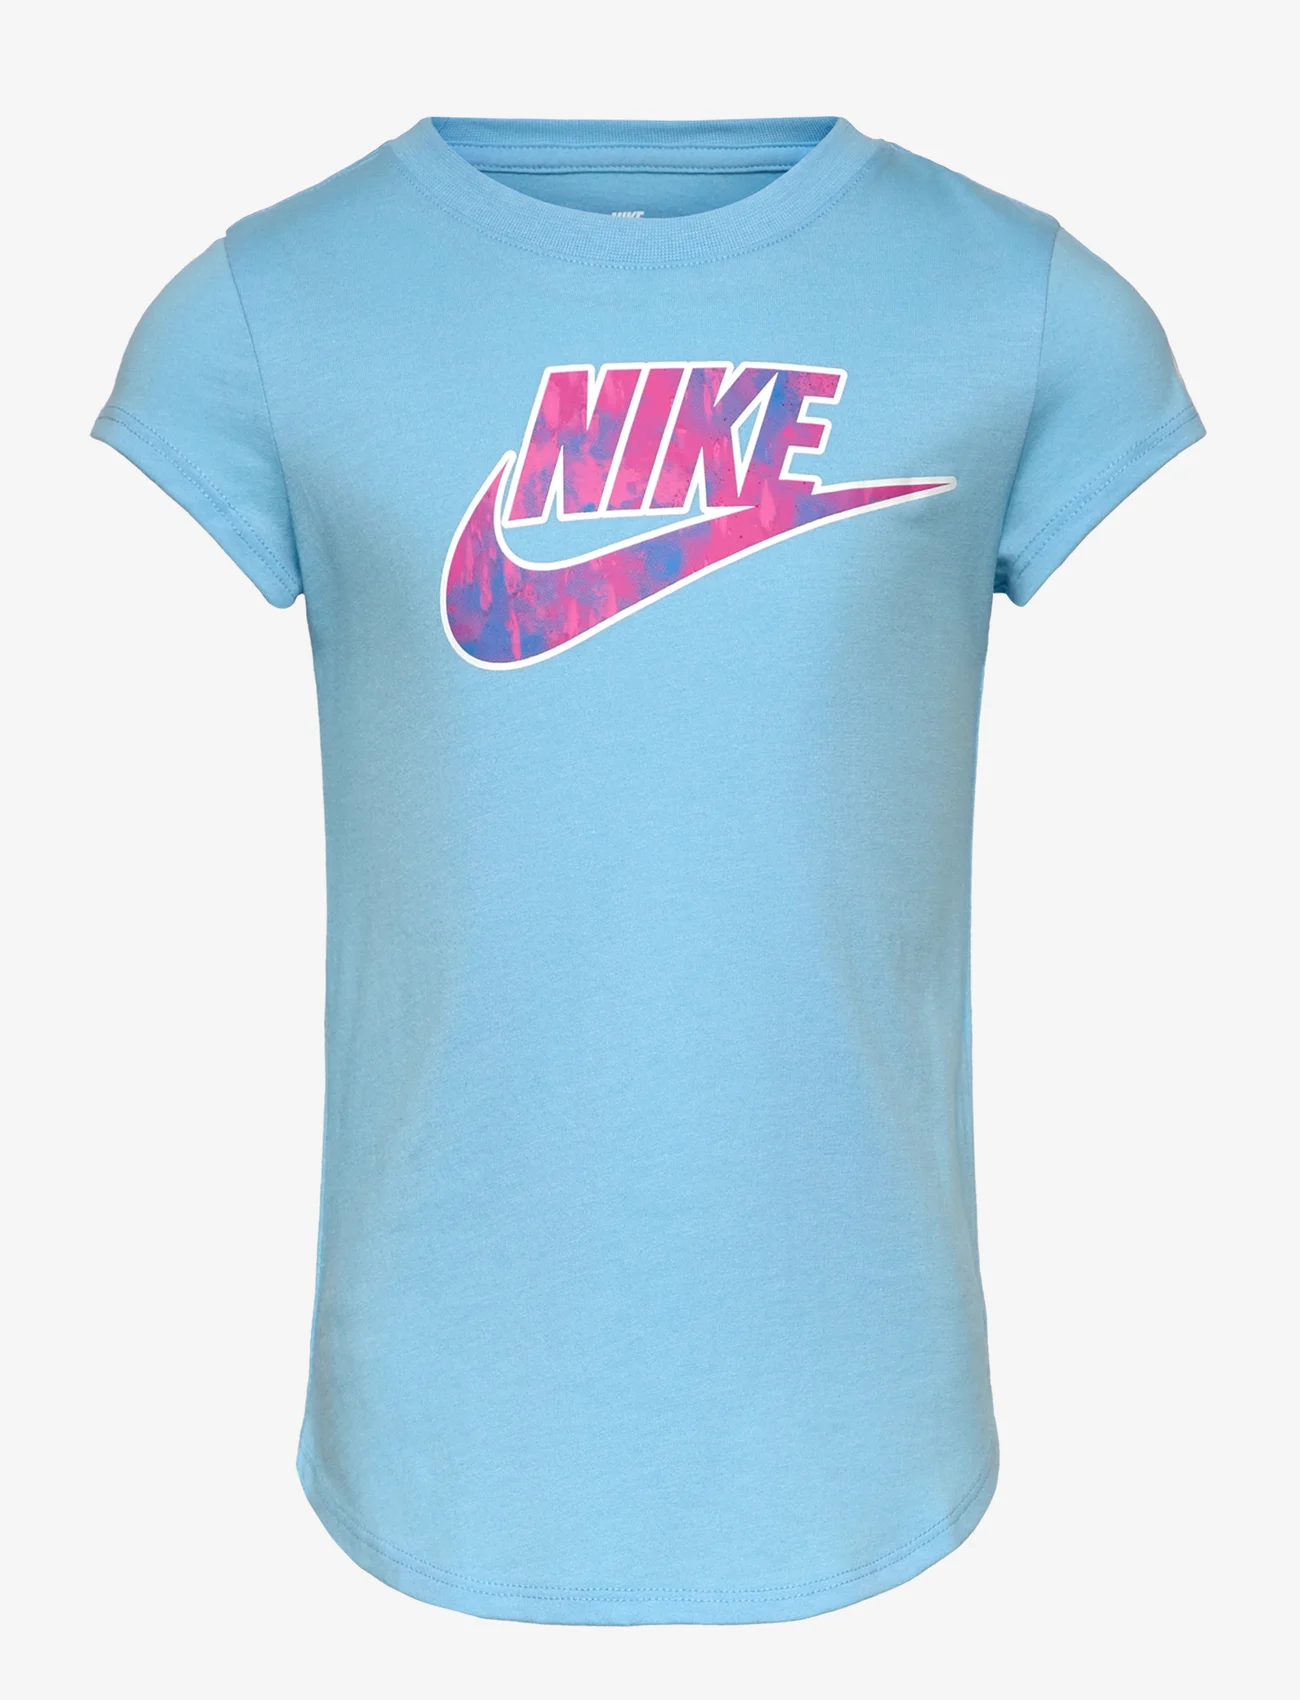 Nike - NKG PRINTED CLUB TEE / NKG PRINTED CLUB TEE - lühikeste varrukatega t-särgid - aquarius blue - 0